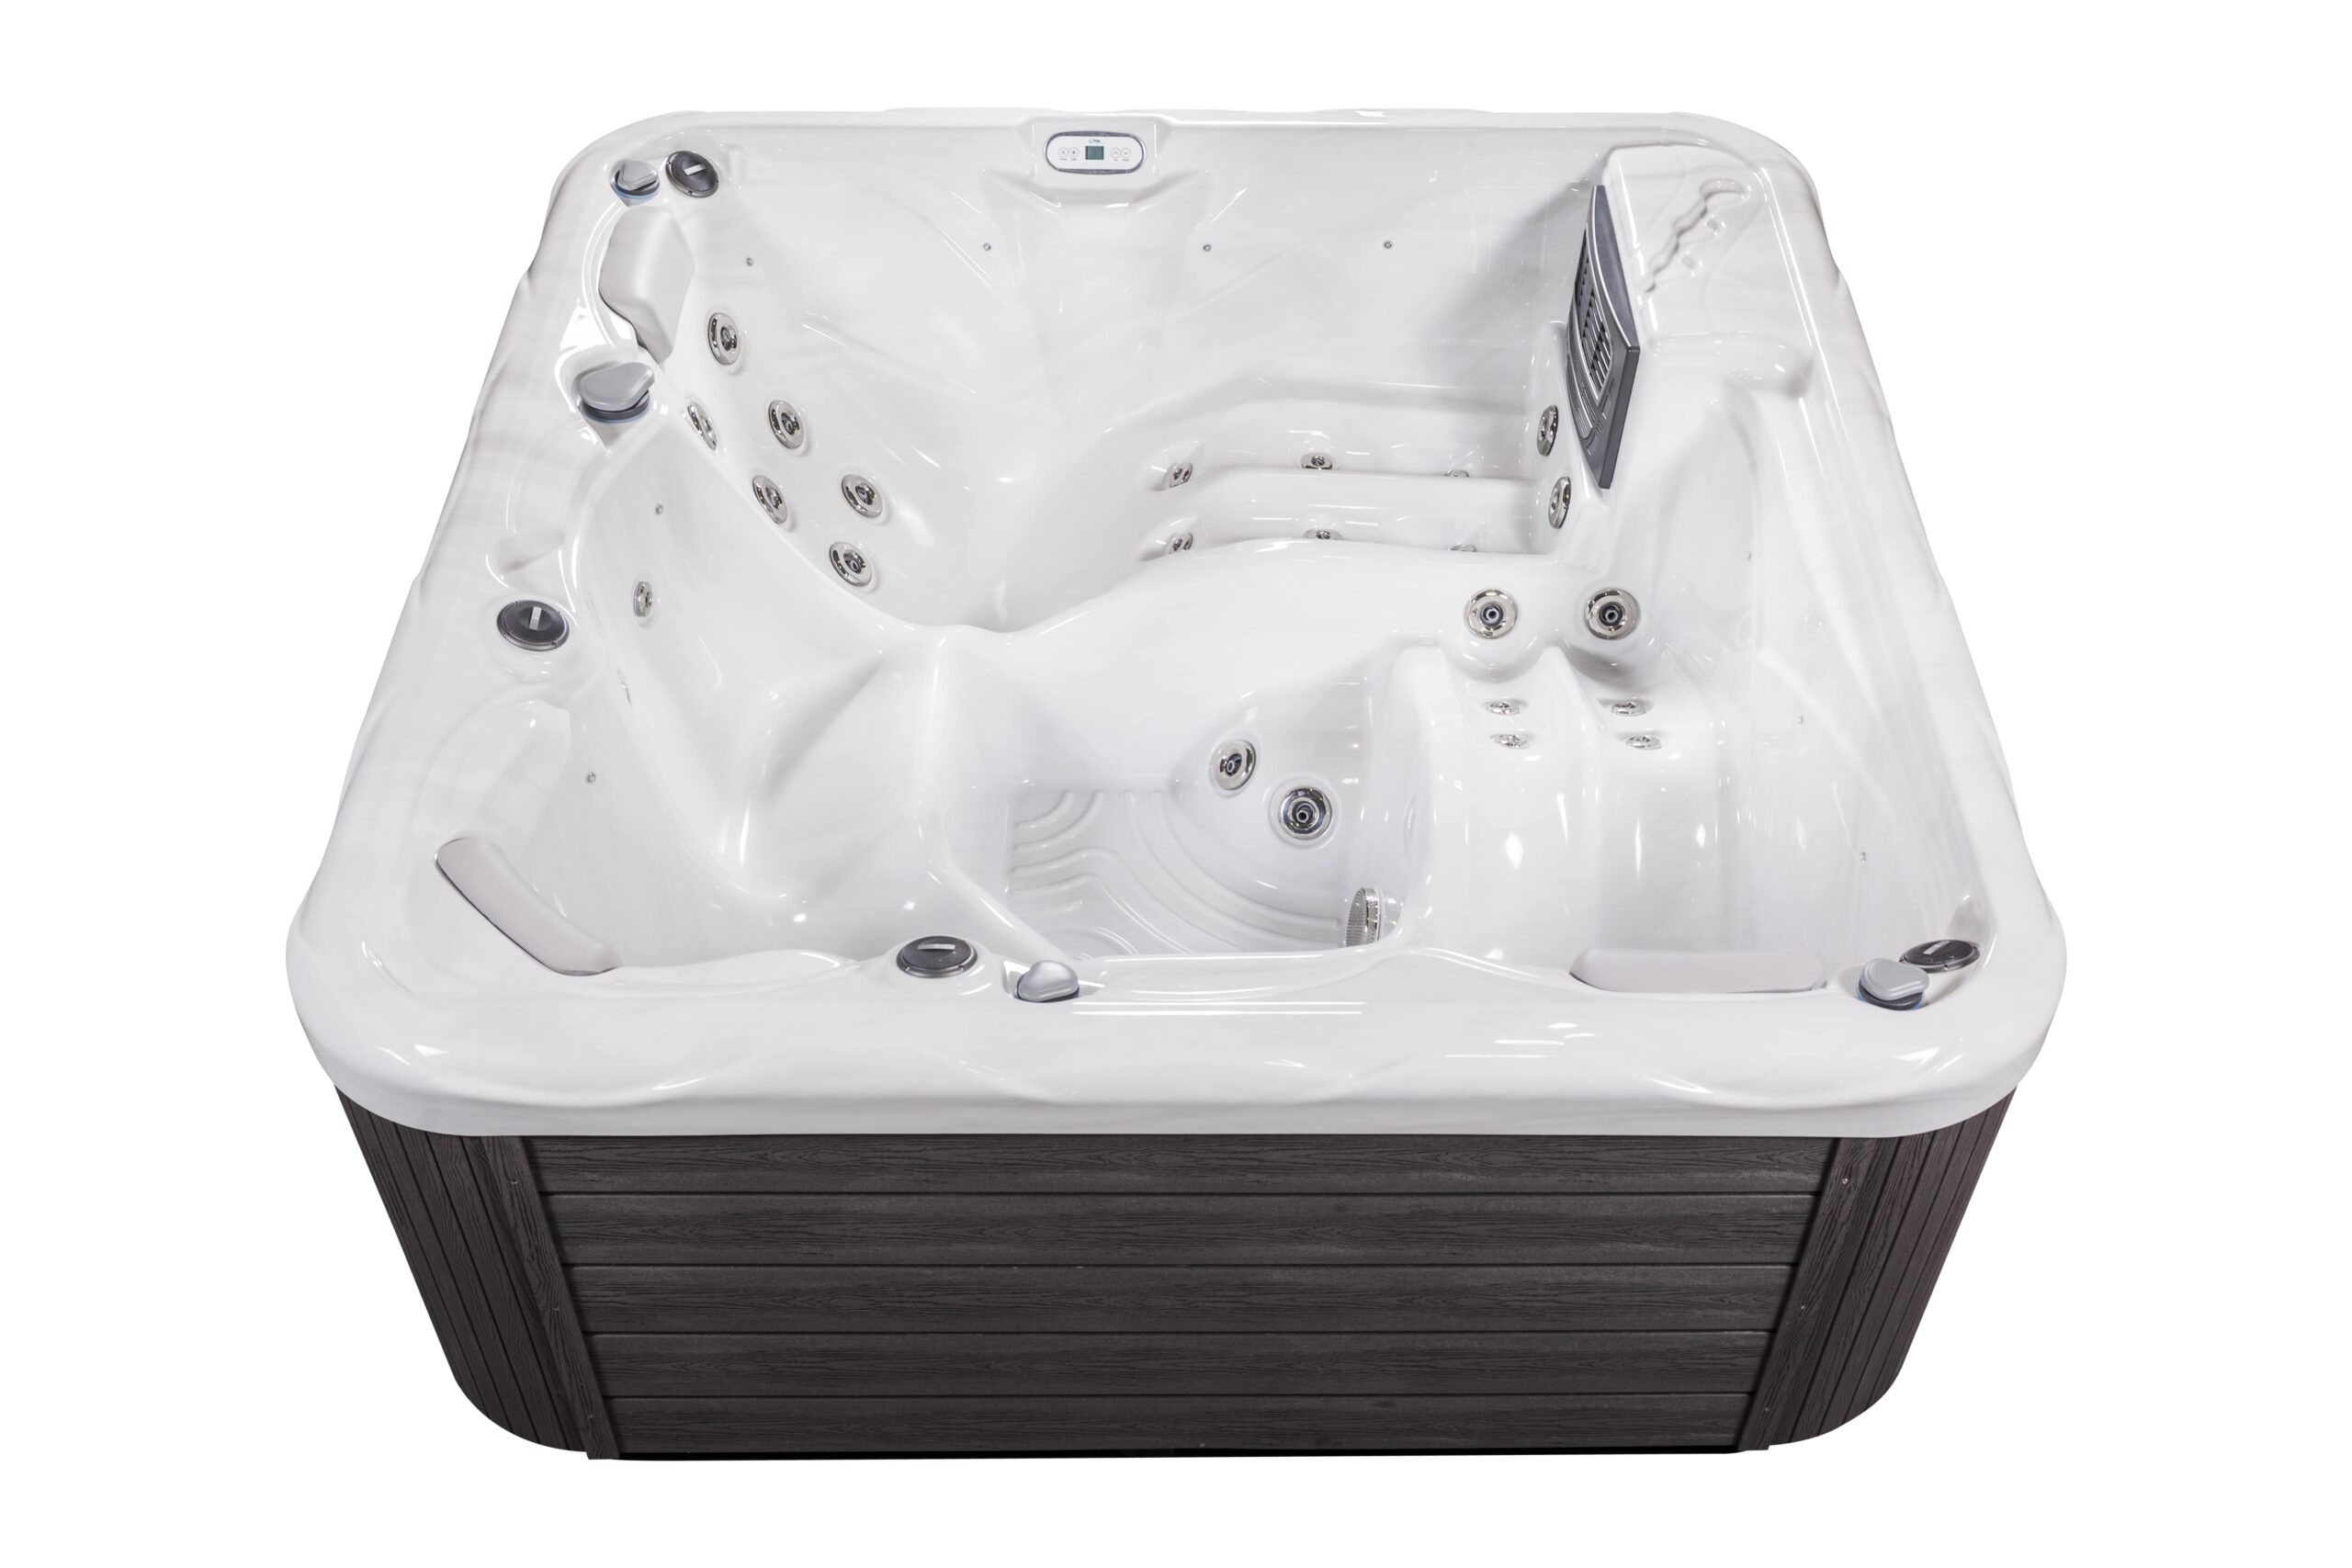 Compact hot tub